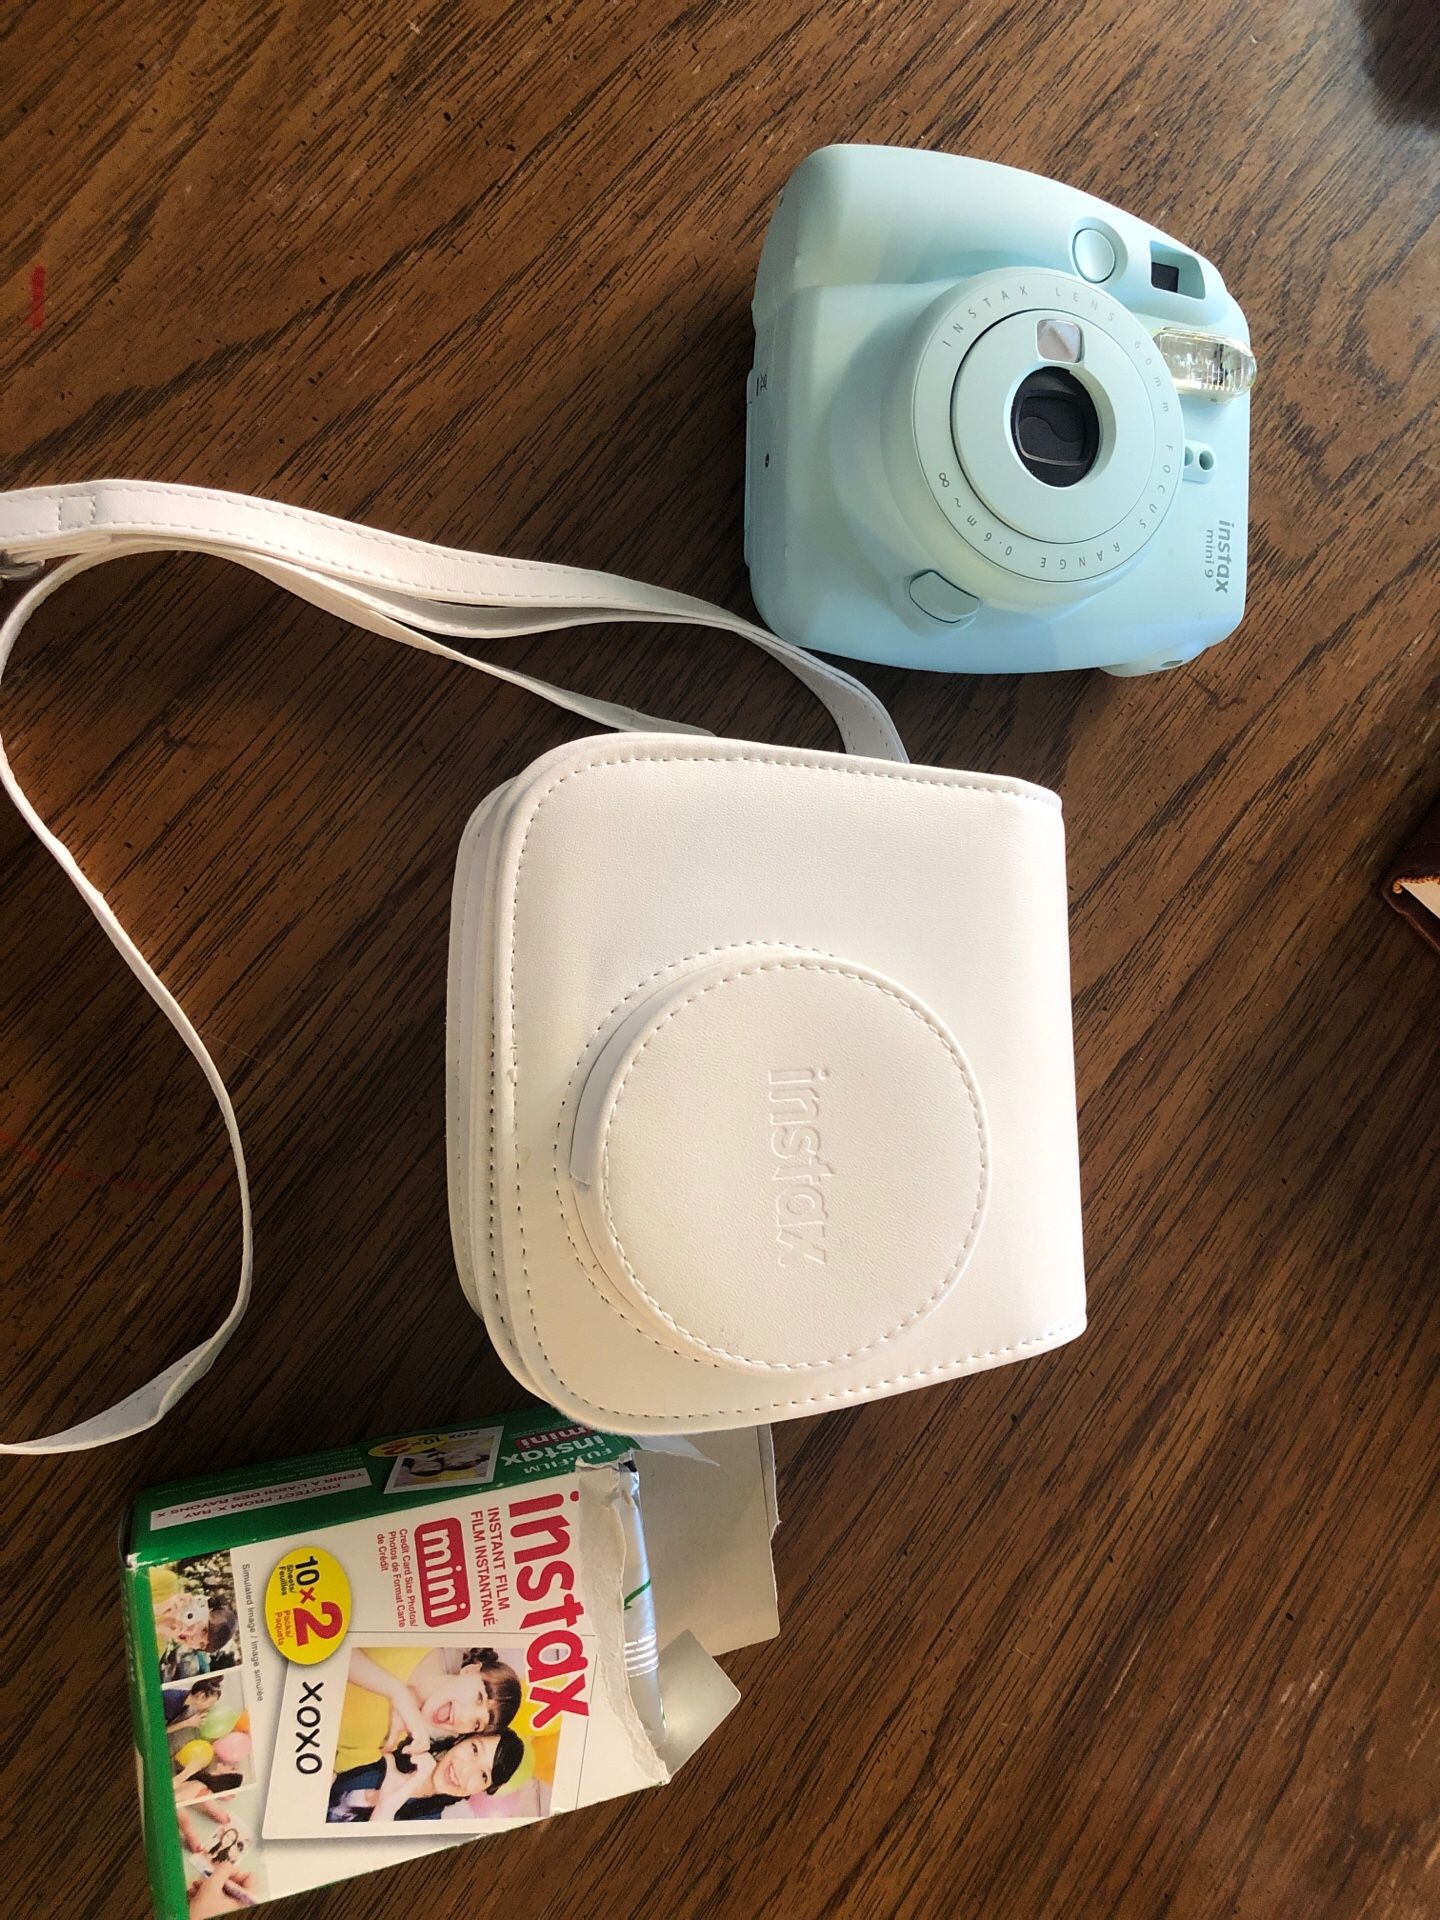 Instax mini 9 w case and film